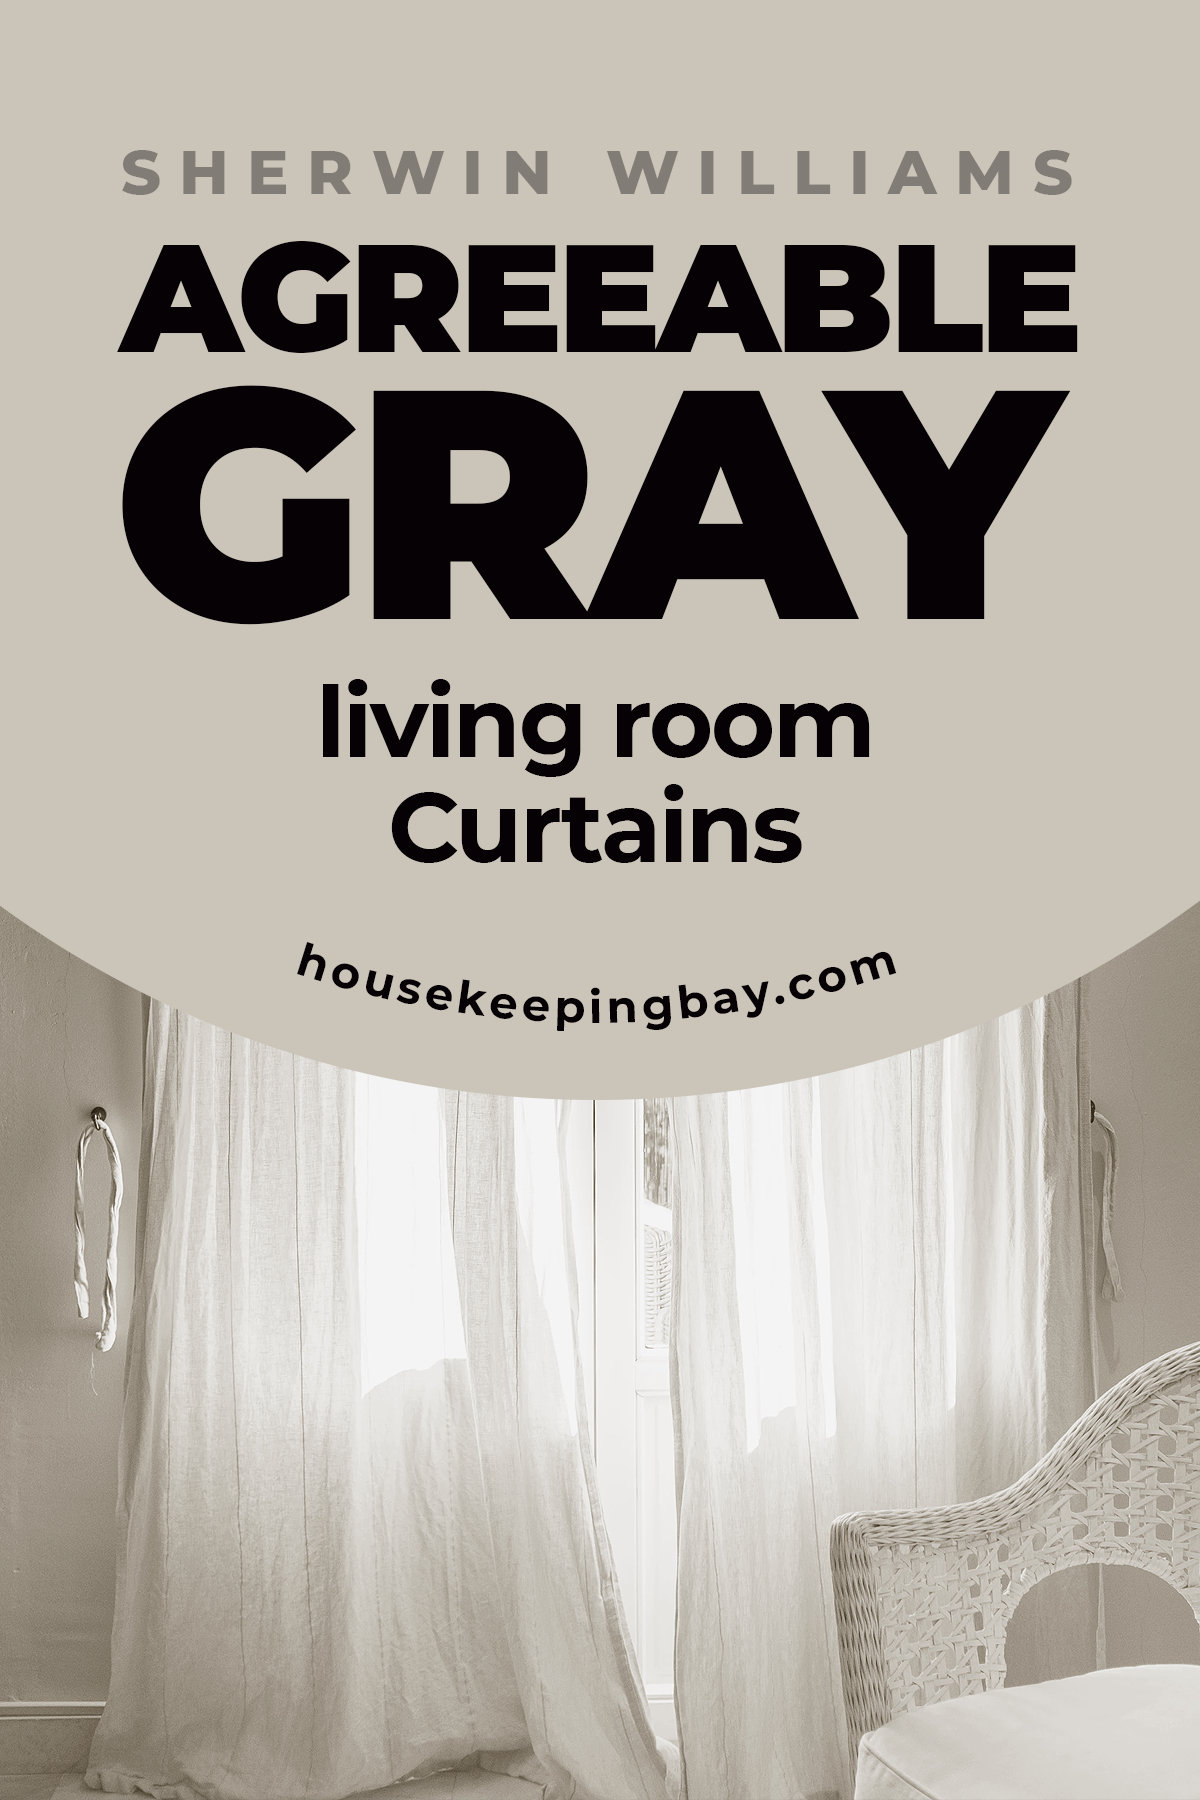 Agreeable Gray living room urtains